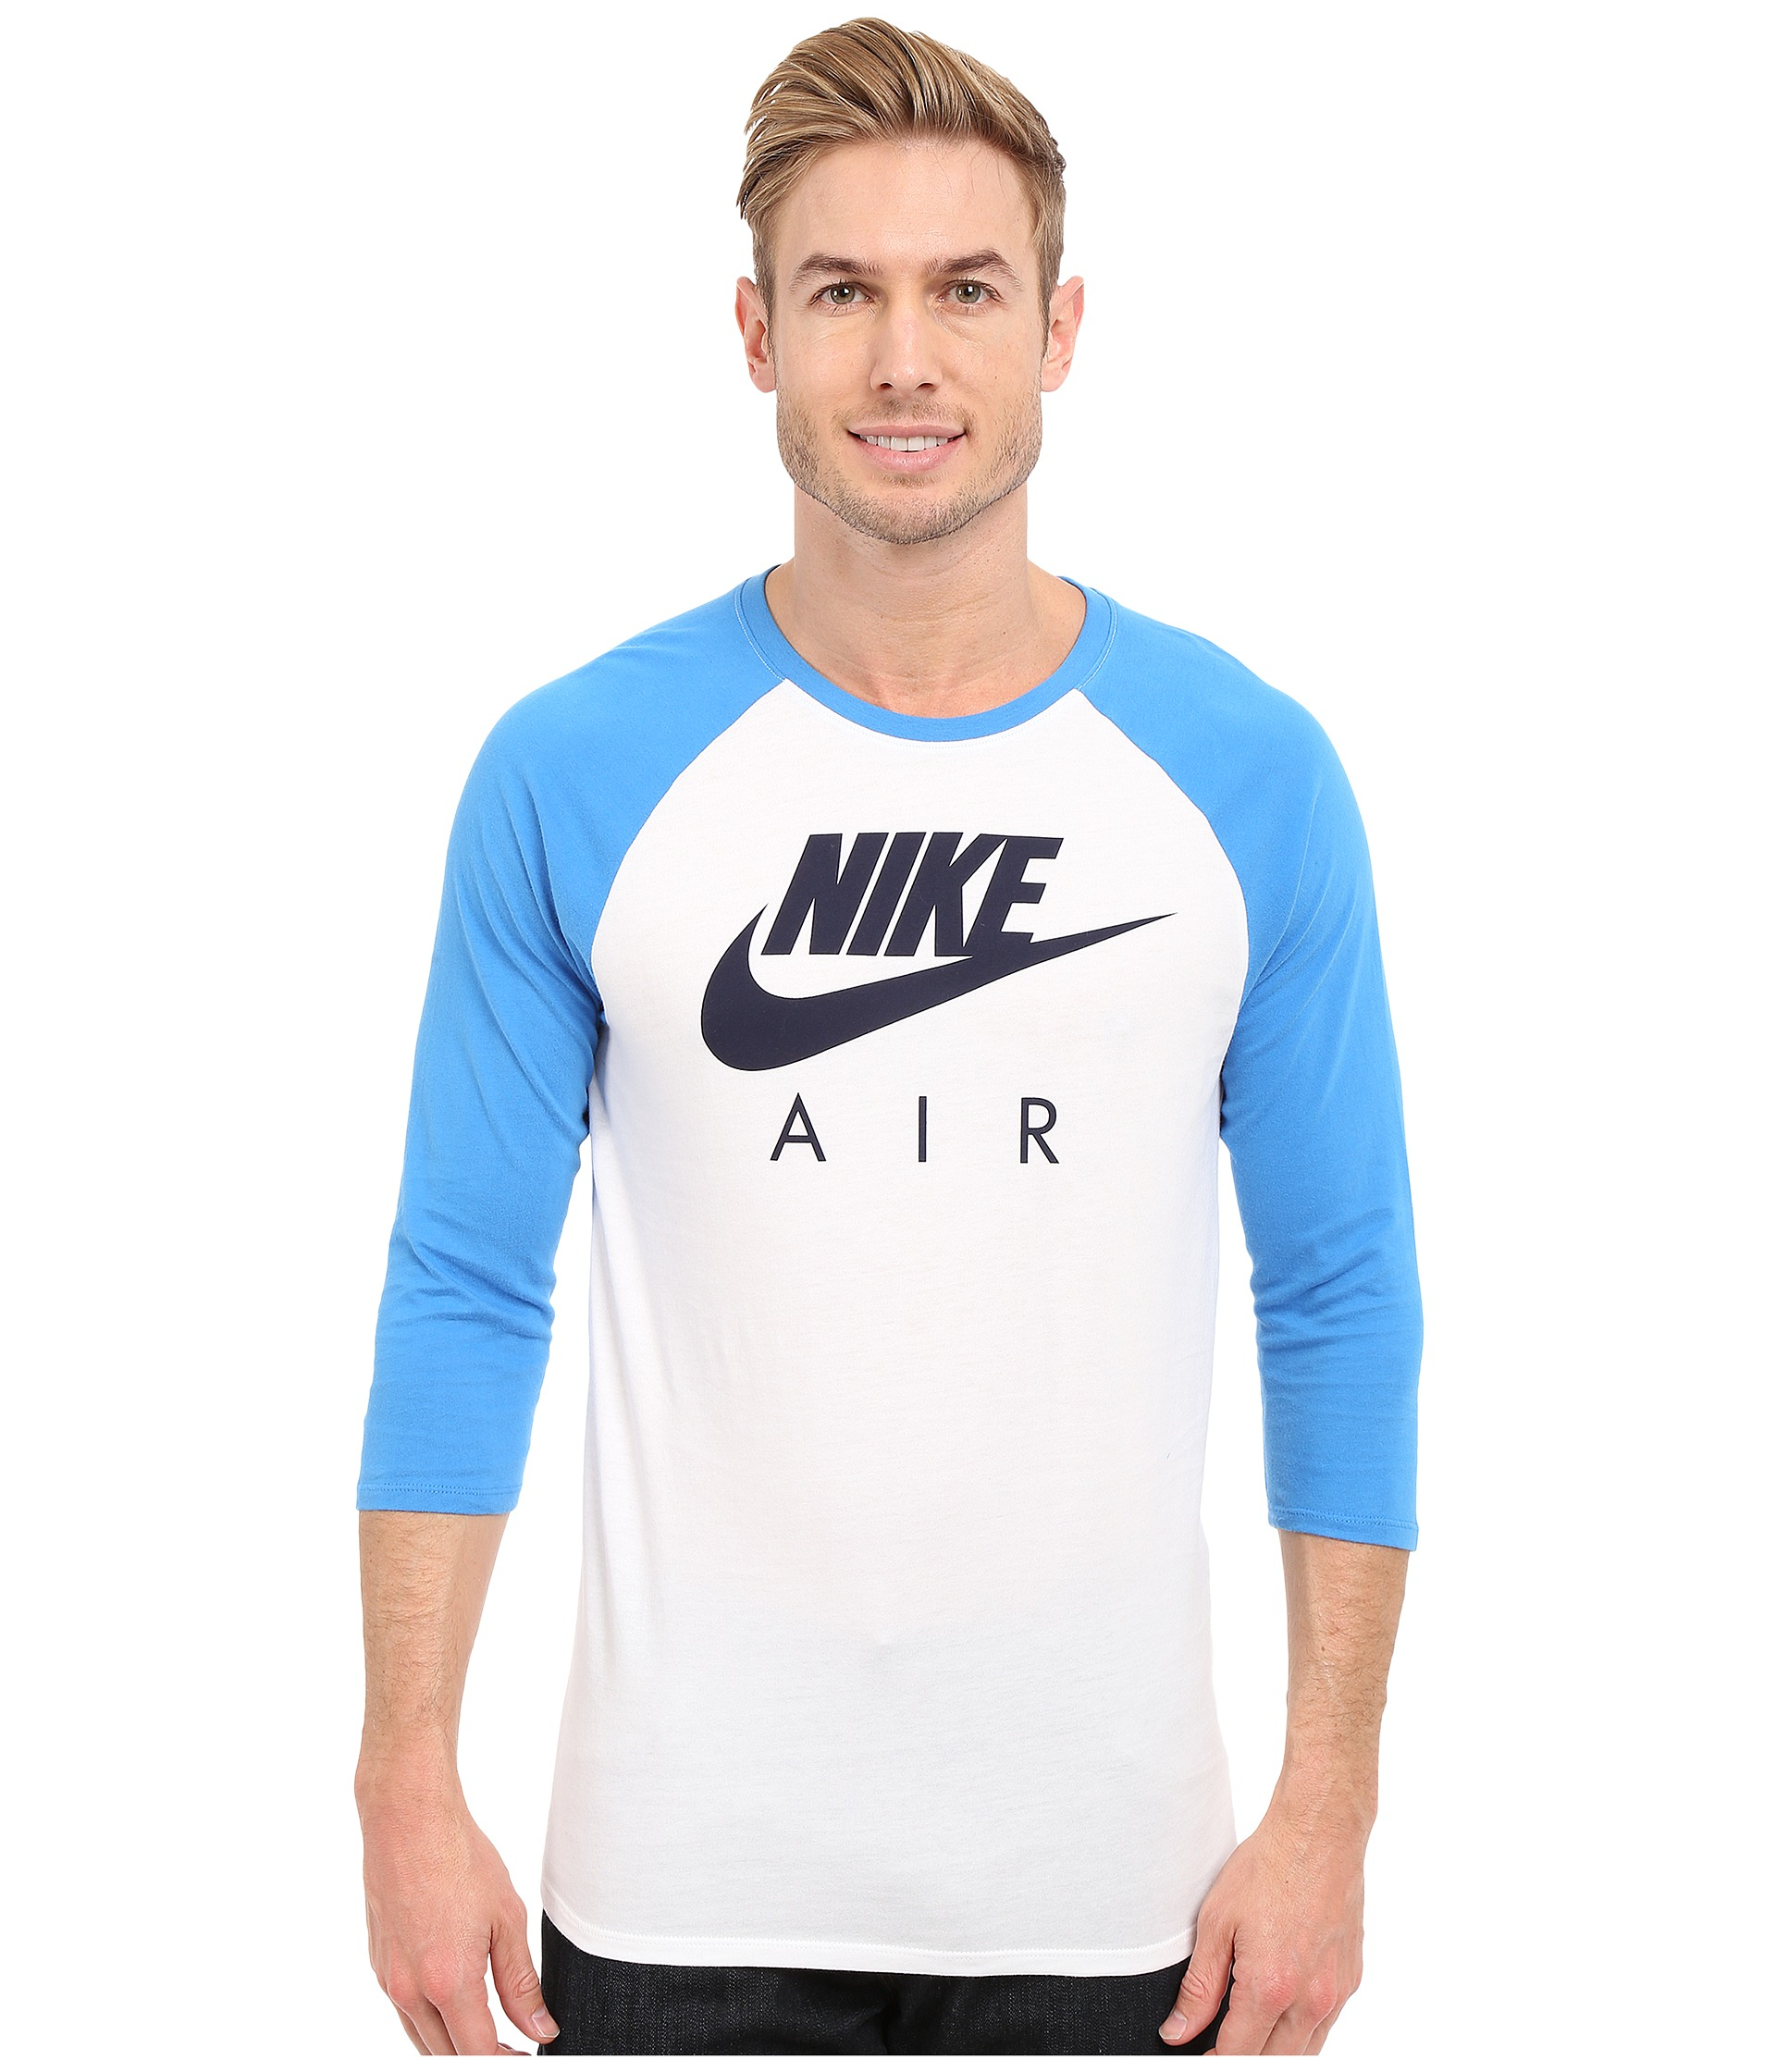 Nike Cotton Air 3/4 Raglan Tee in Blue for Men - Lyst